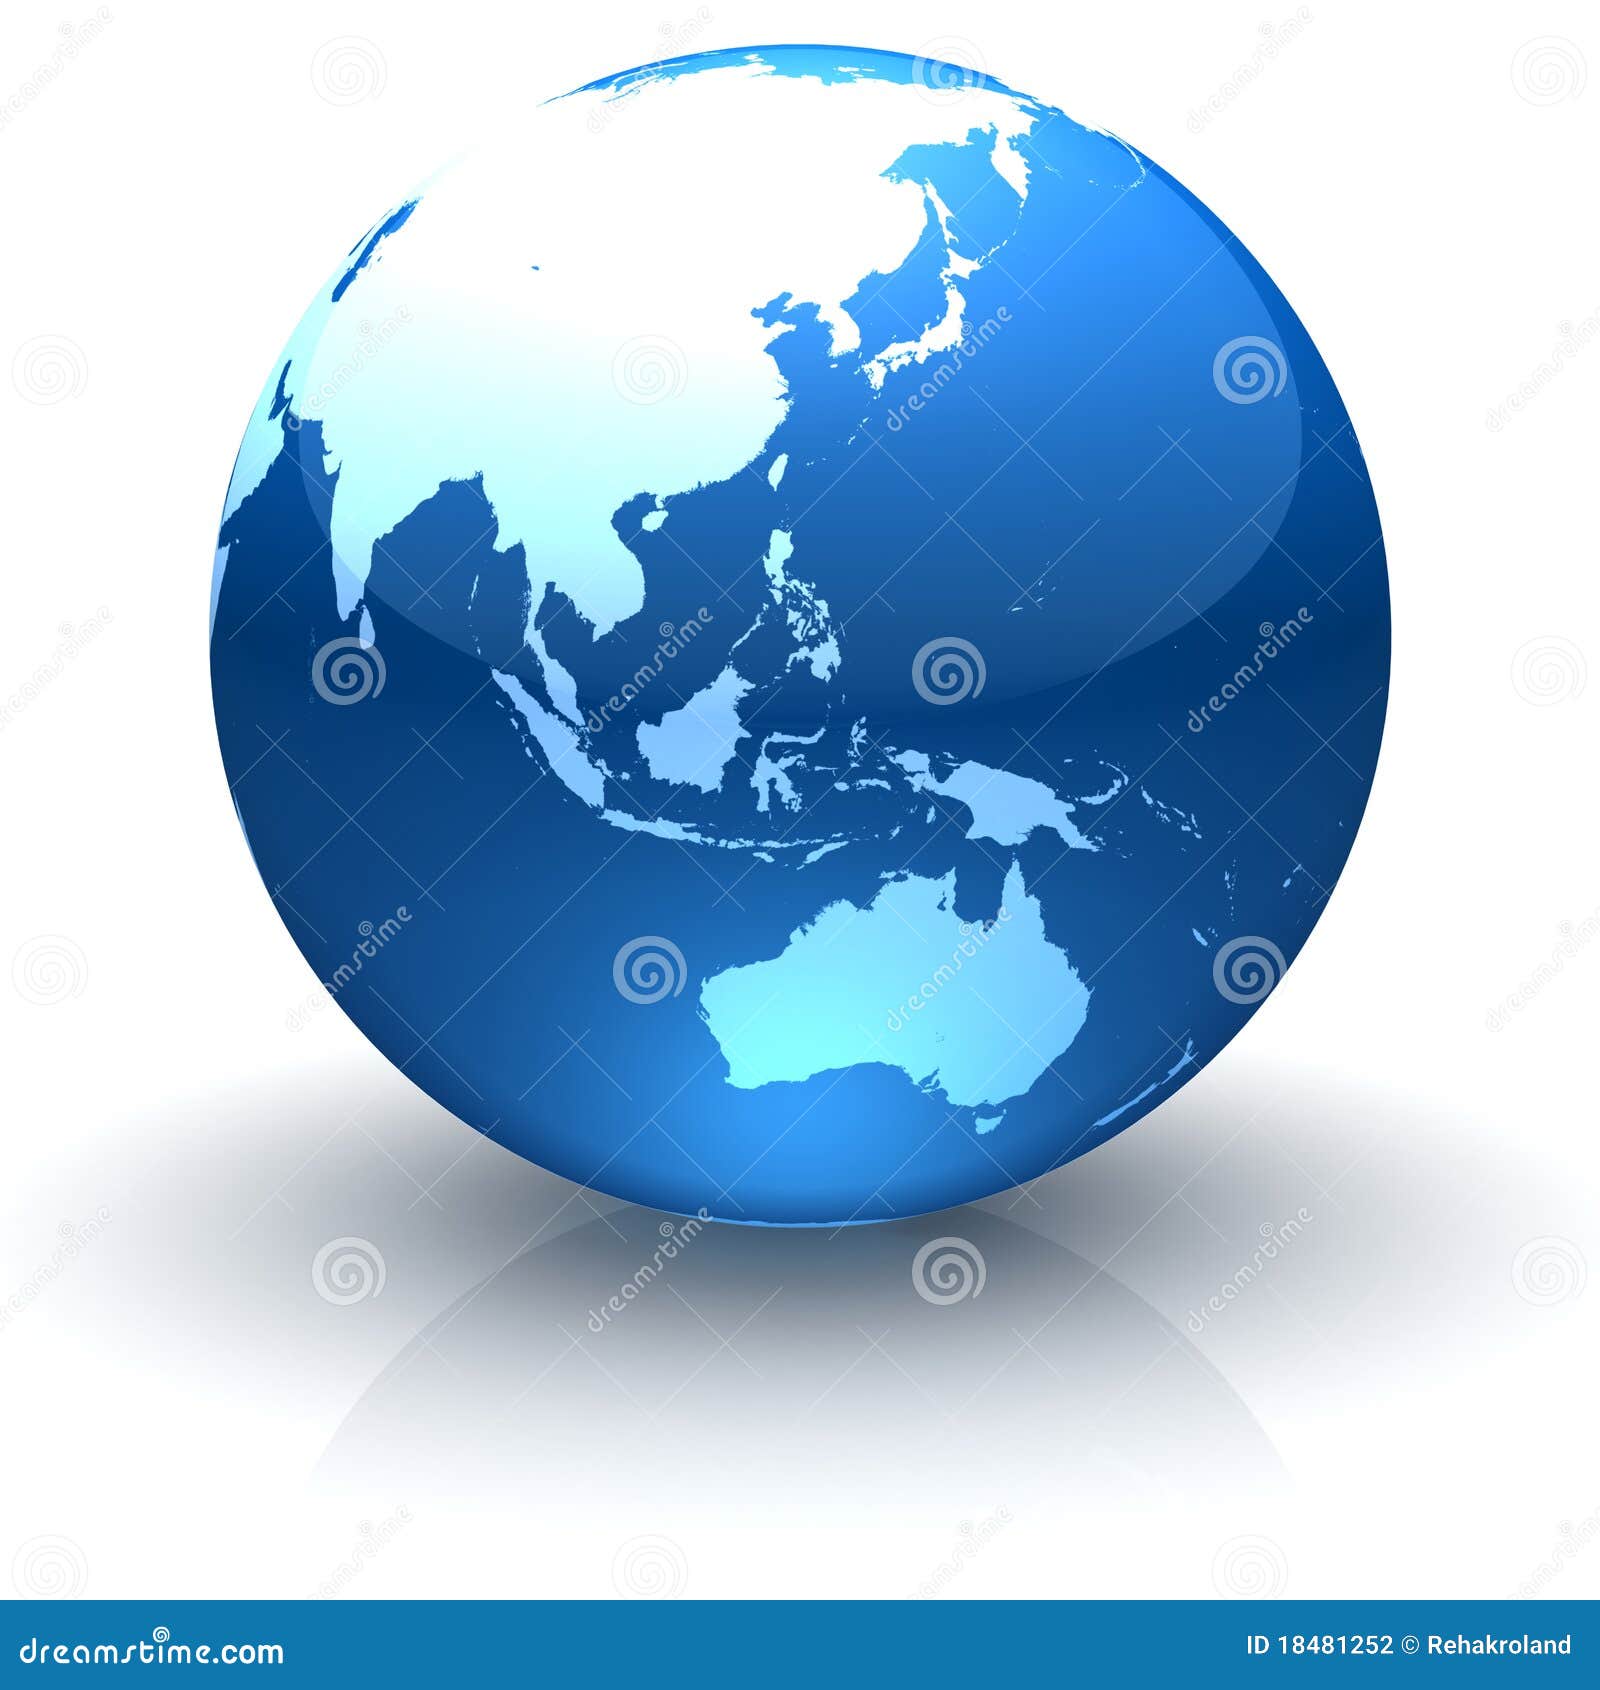 shiny globe facing asia, oceania and australia